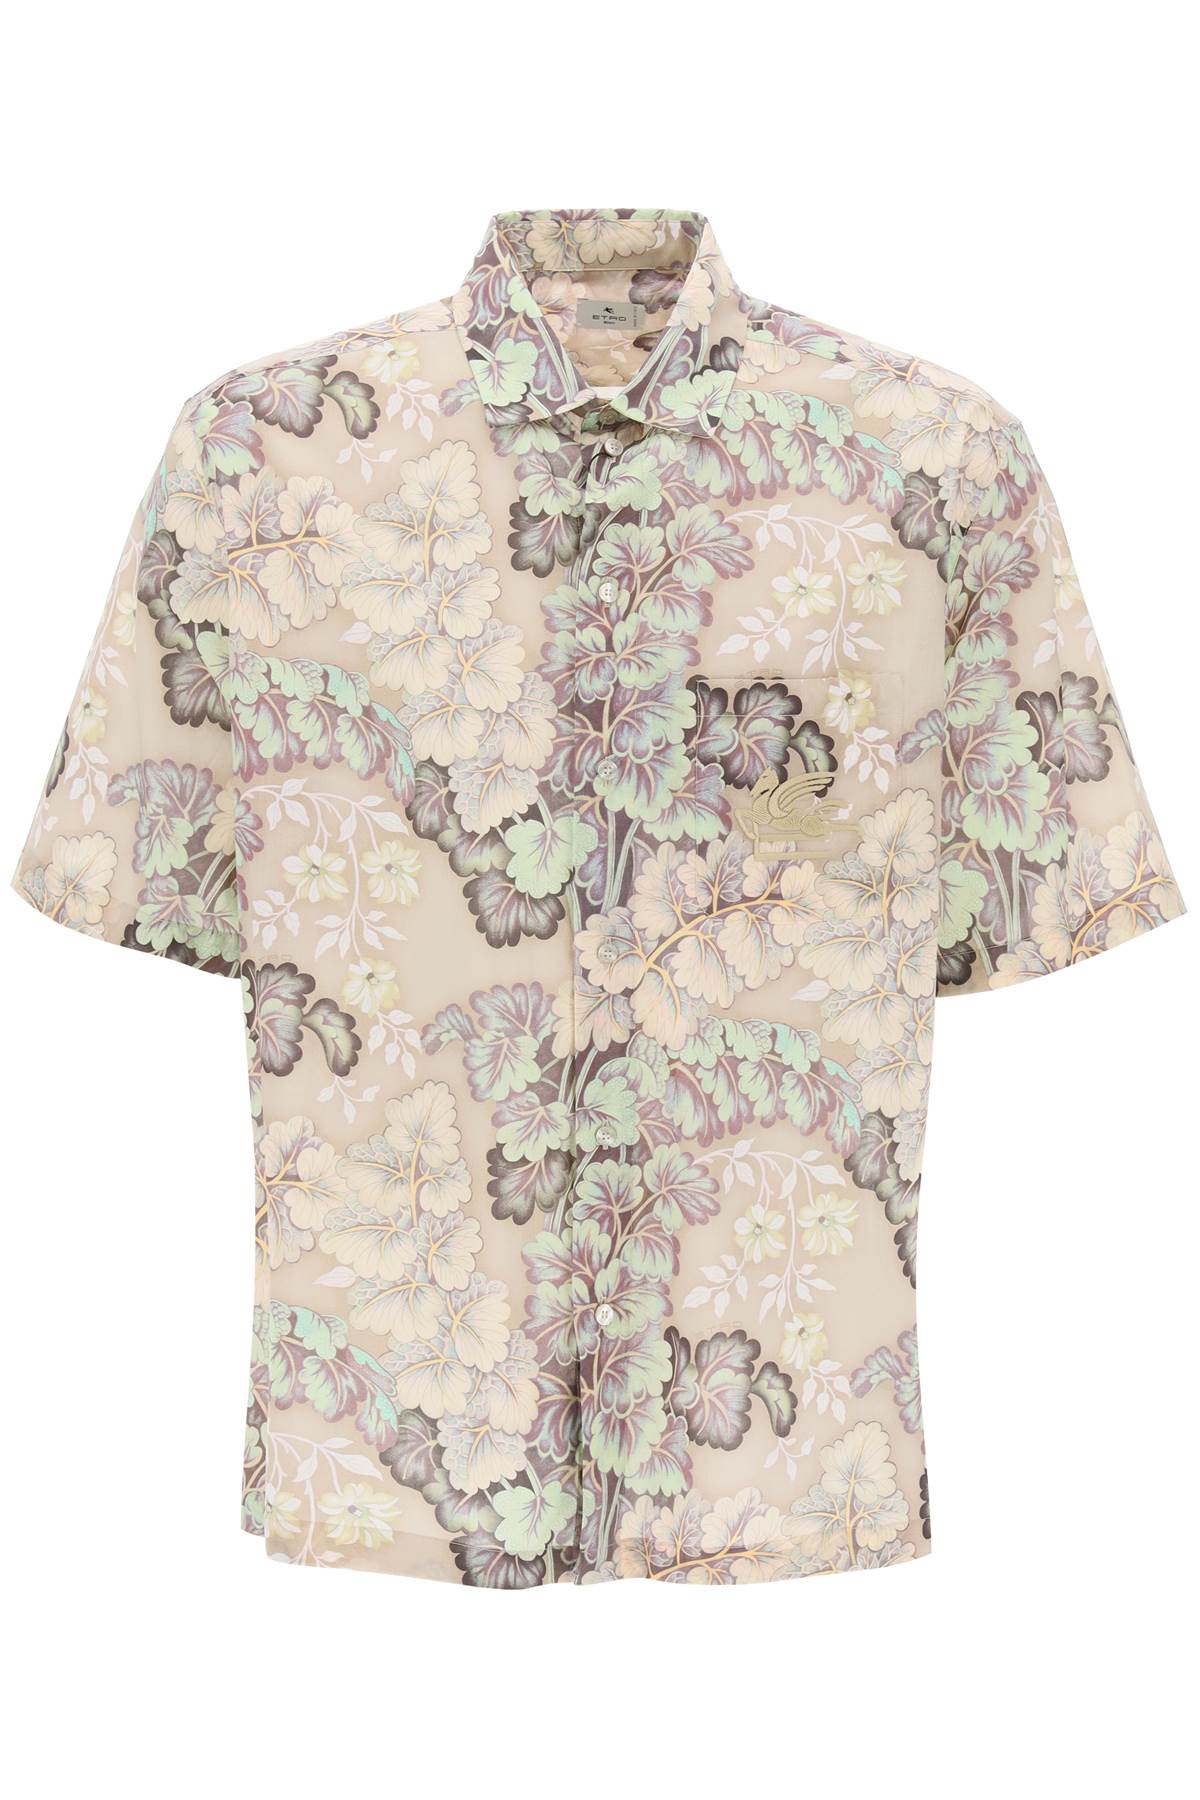 Etro short-sleeved floral shirt